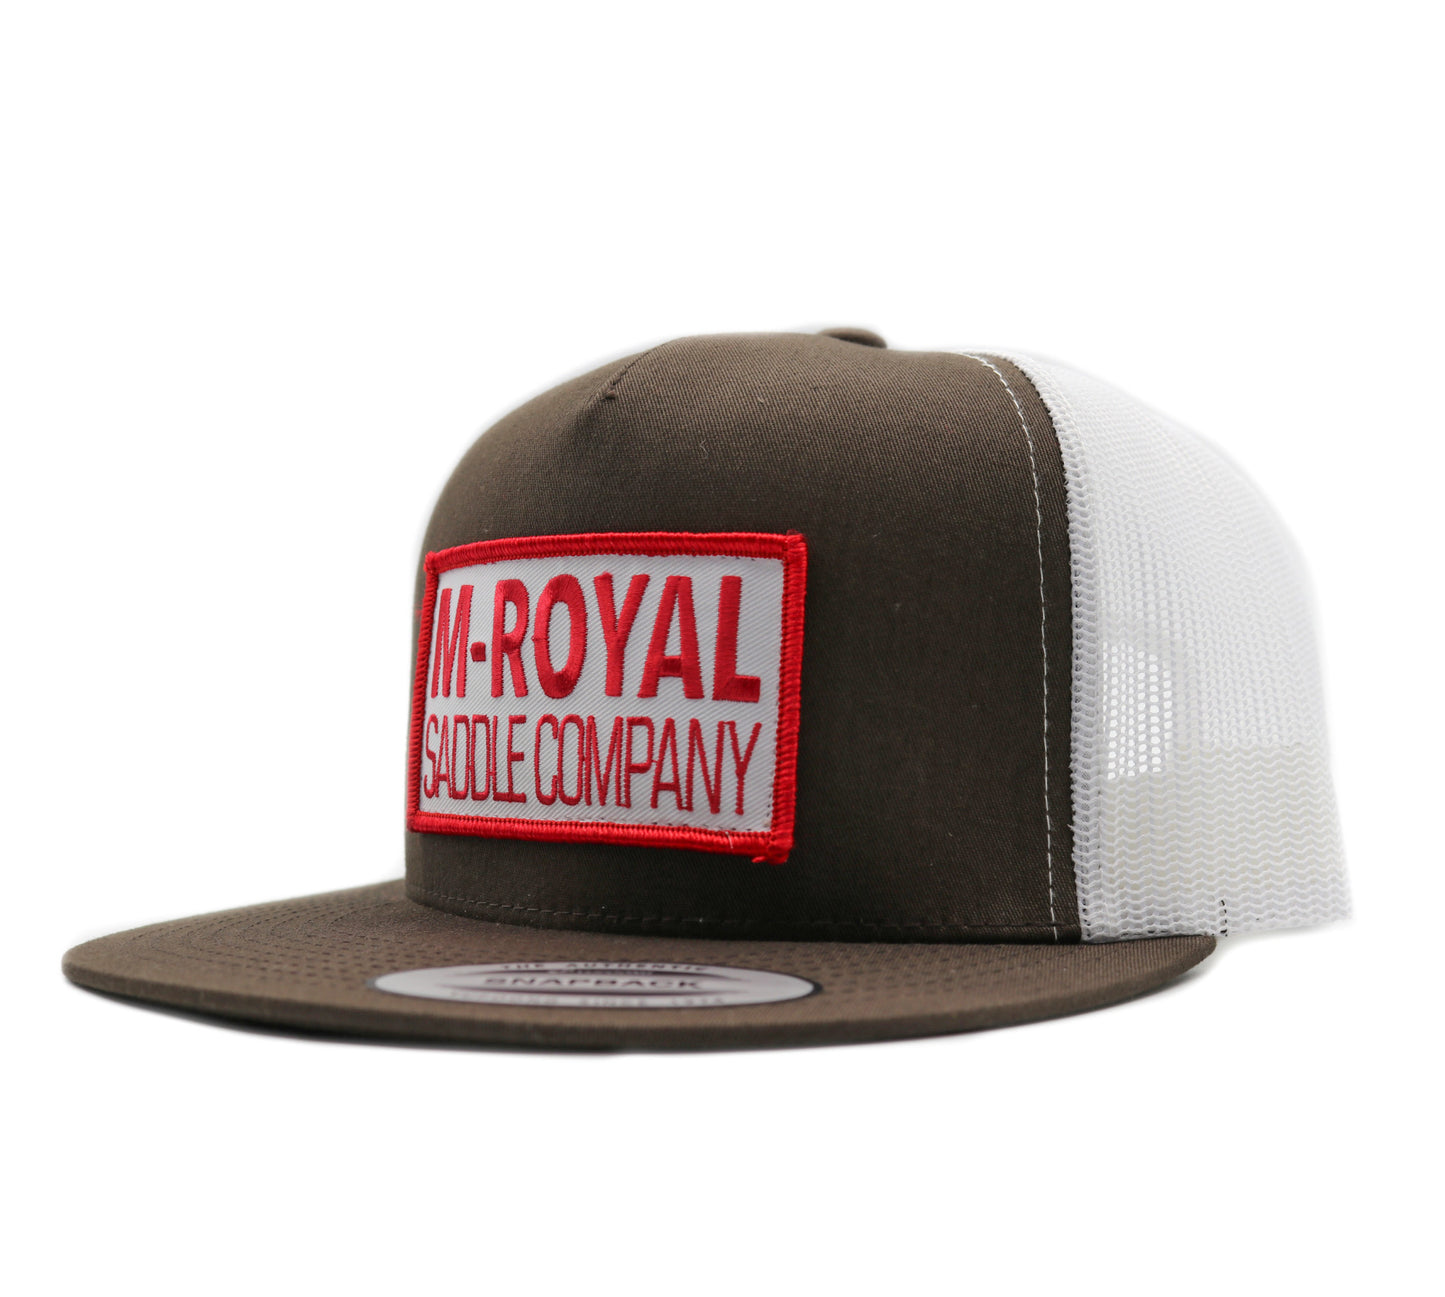 M-Royal Saddle Company Brown Trucker Hat Cachucha